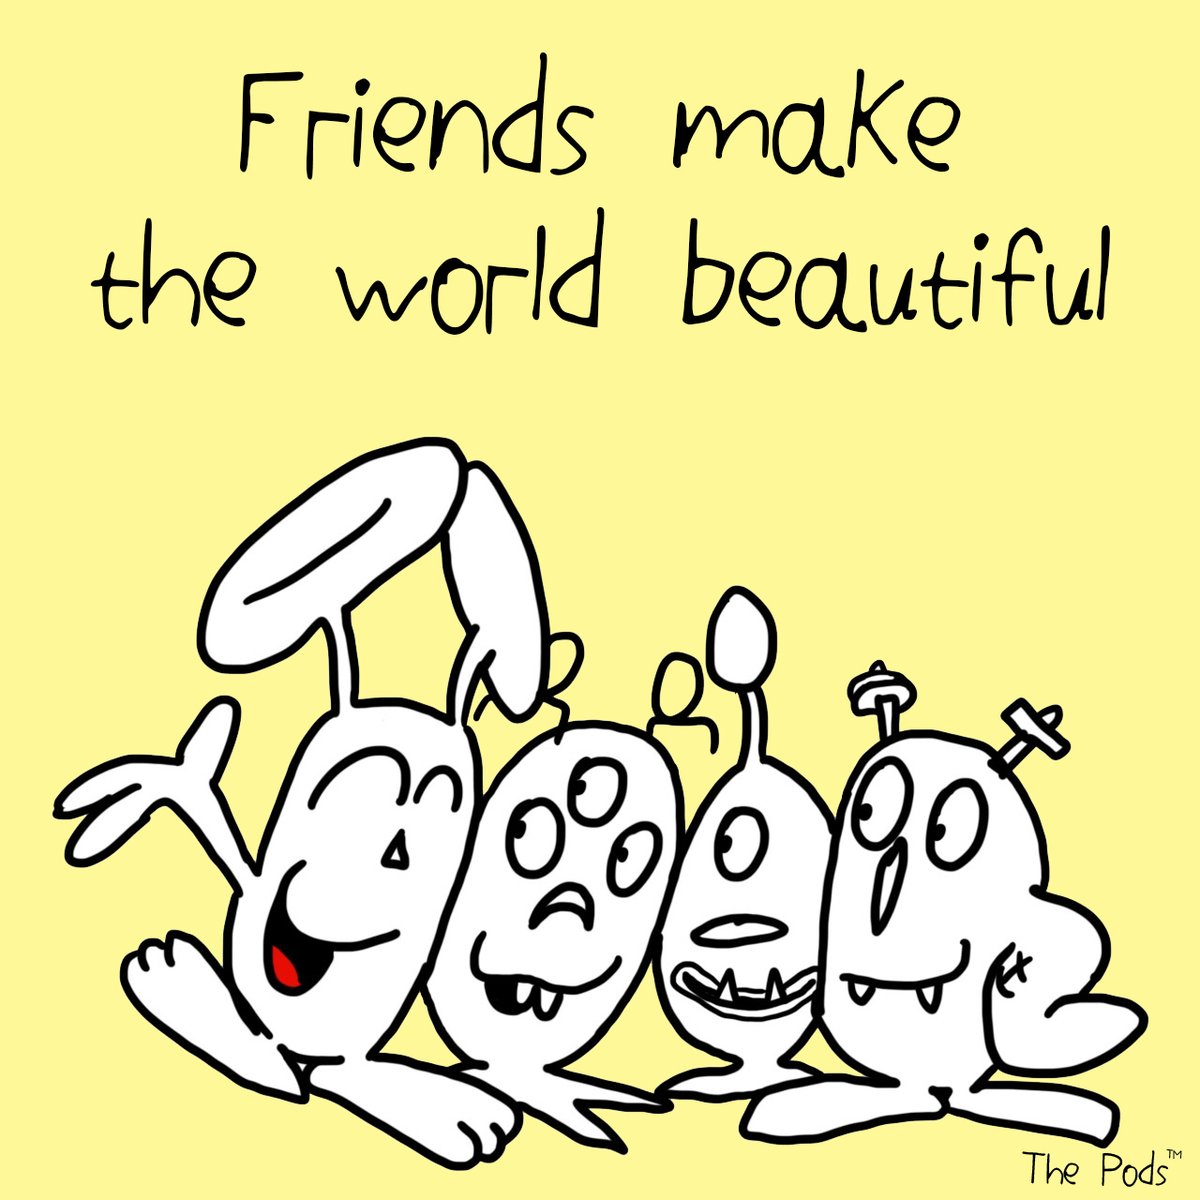 To all our friends...
#friends #friendship #bff #besties #weloveourfriends #instafriend #instafriends #meetthepods #thepods #bunnypod #scaredypod #snappypod #musclepod #autisticartist #autism #cartoon #quote #quoteoftheday #quotes #friendquote #friendshipquote